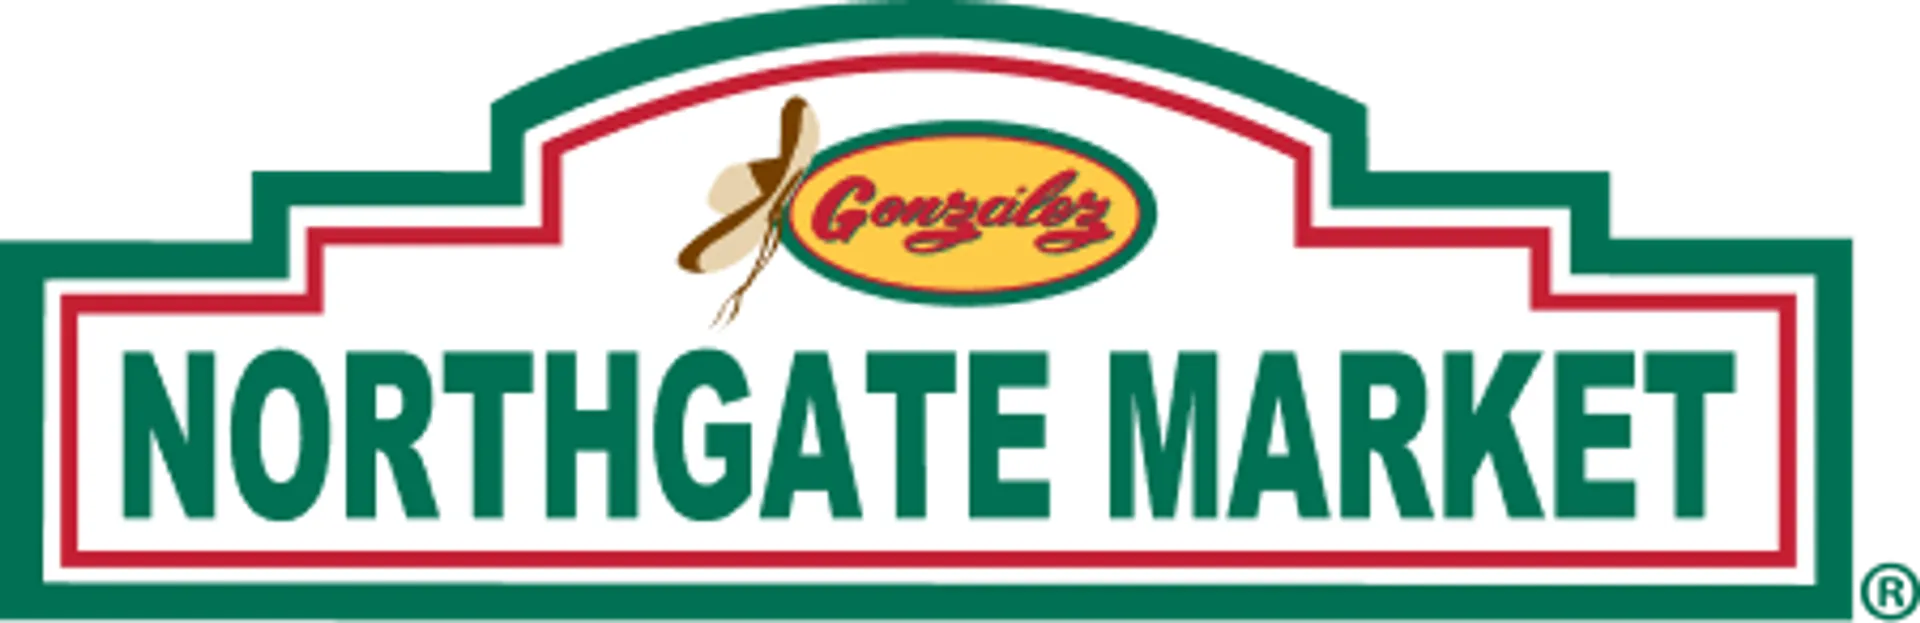 NORTHGATE MARKET logo